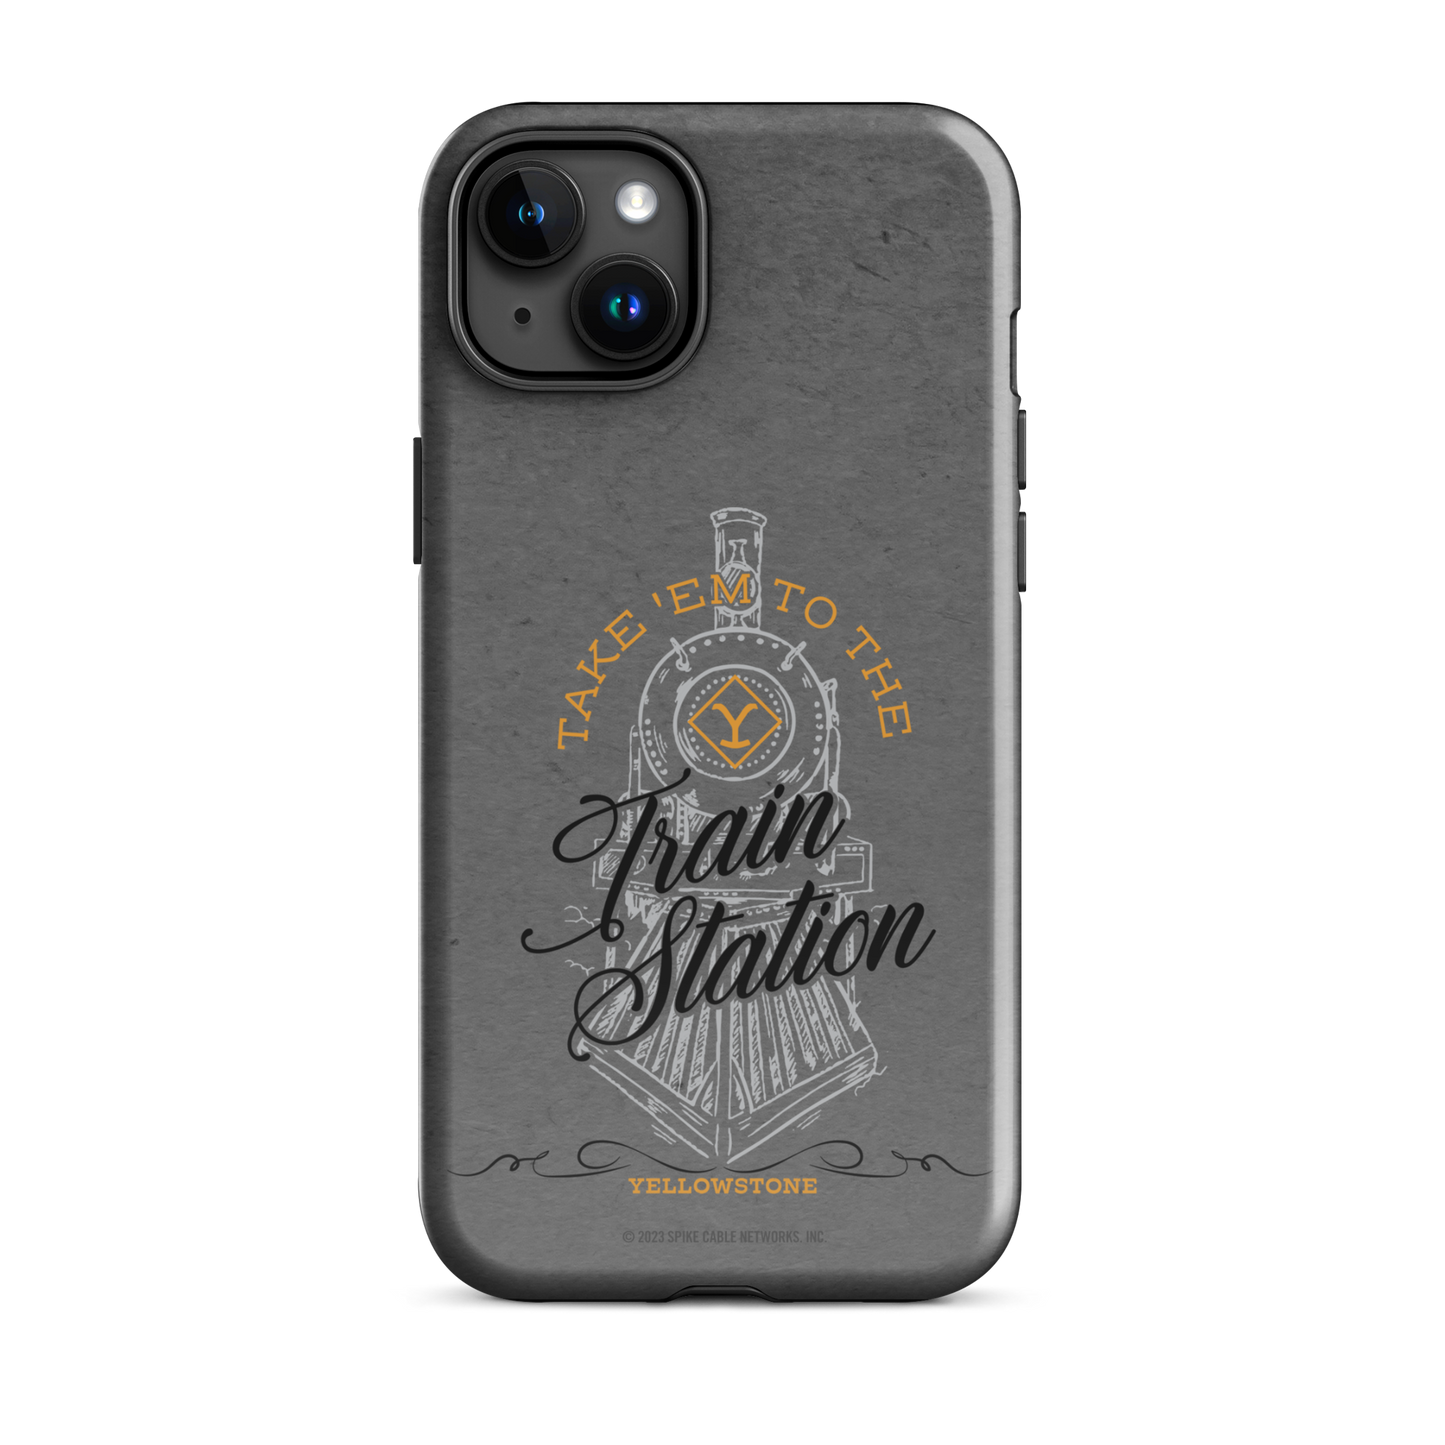 Yellowstone Train Station Tough Phone Case - iPhone